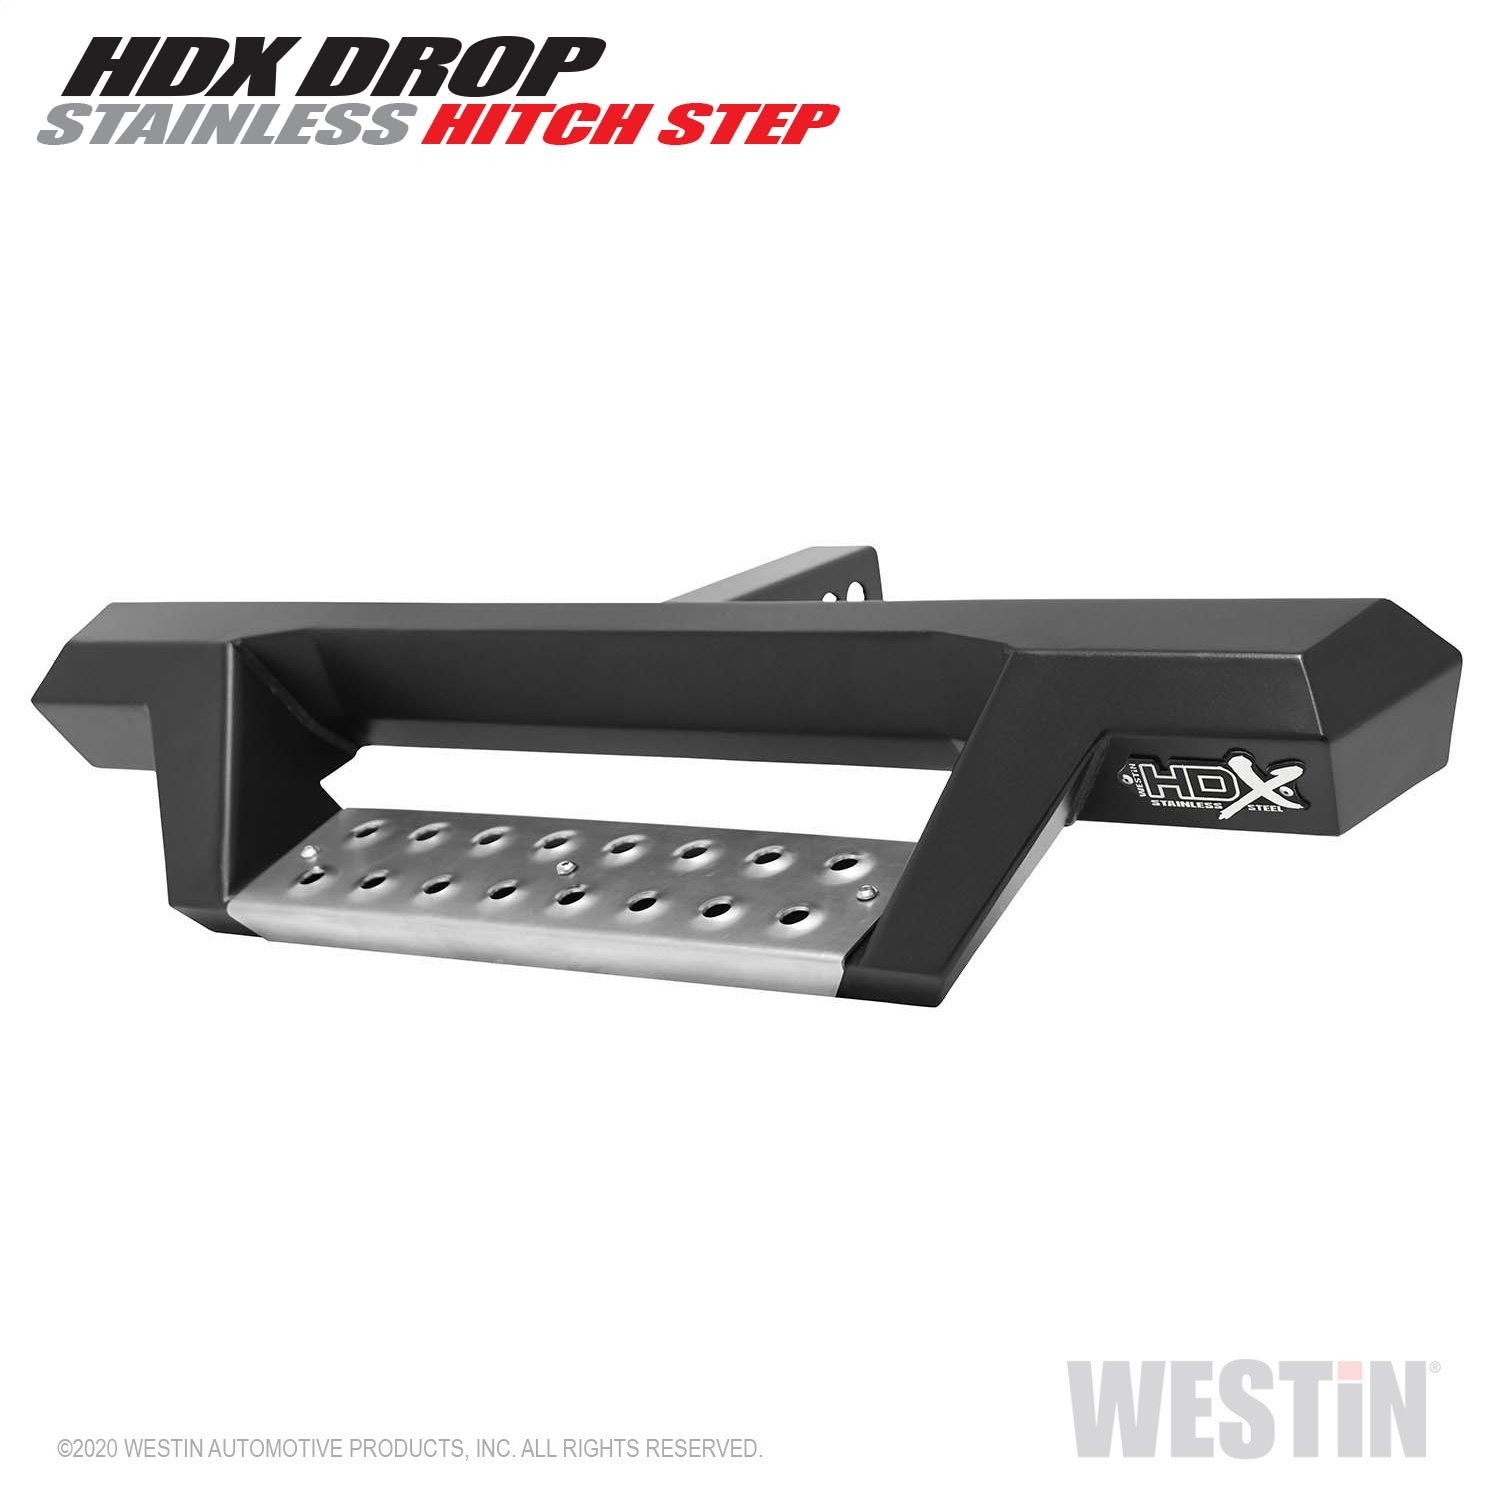 HDX SS Drop Hitch Step